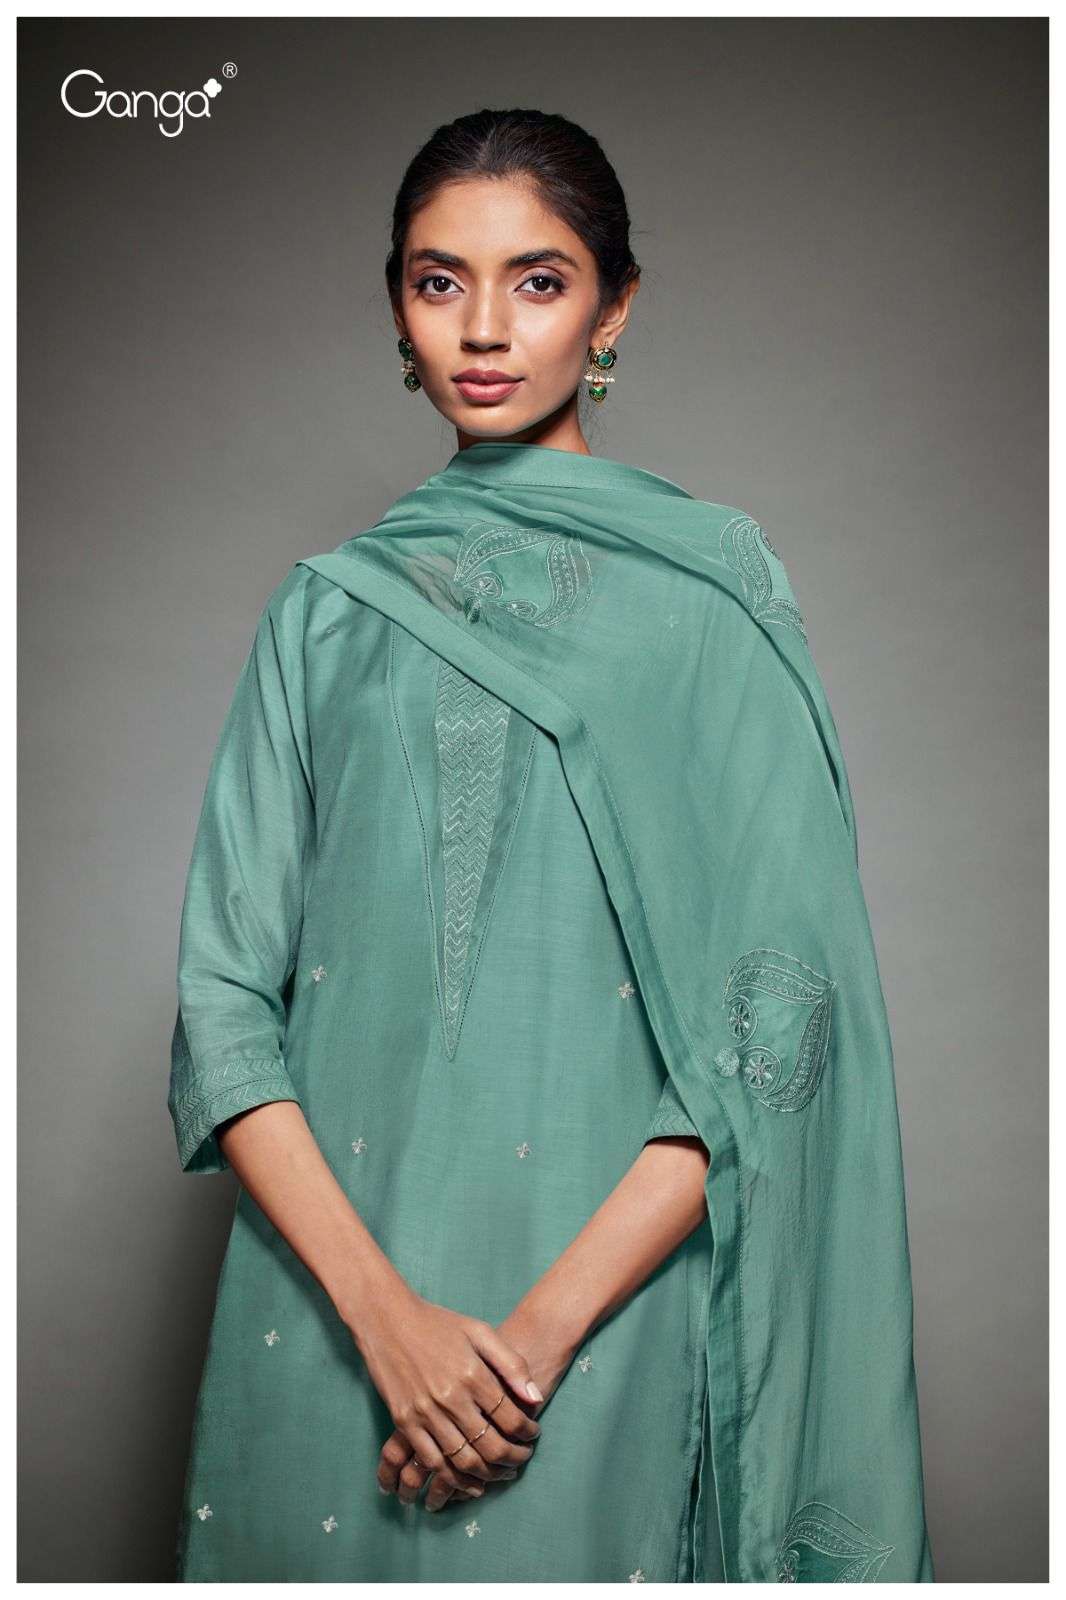 ganga raveena 1617 series exclusive designer salwar kameez catalogue wholesale price surat 